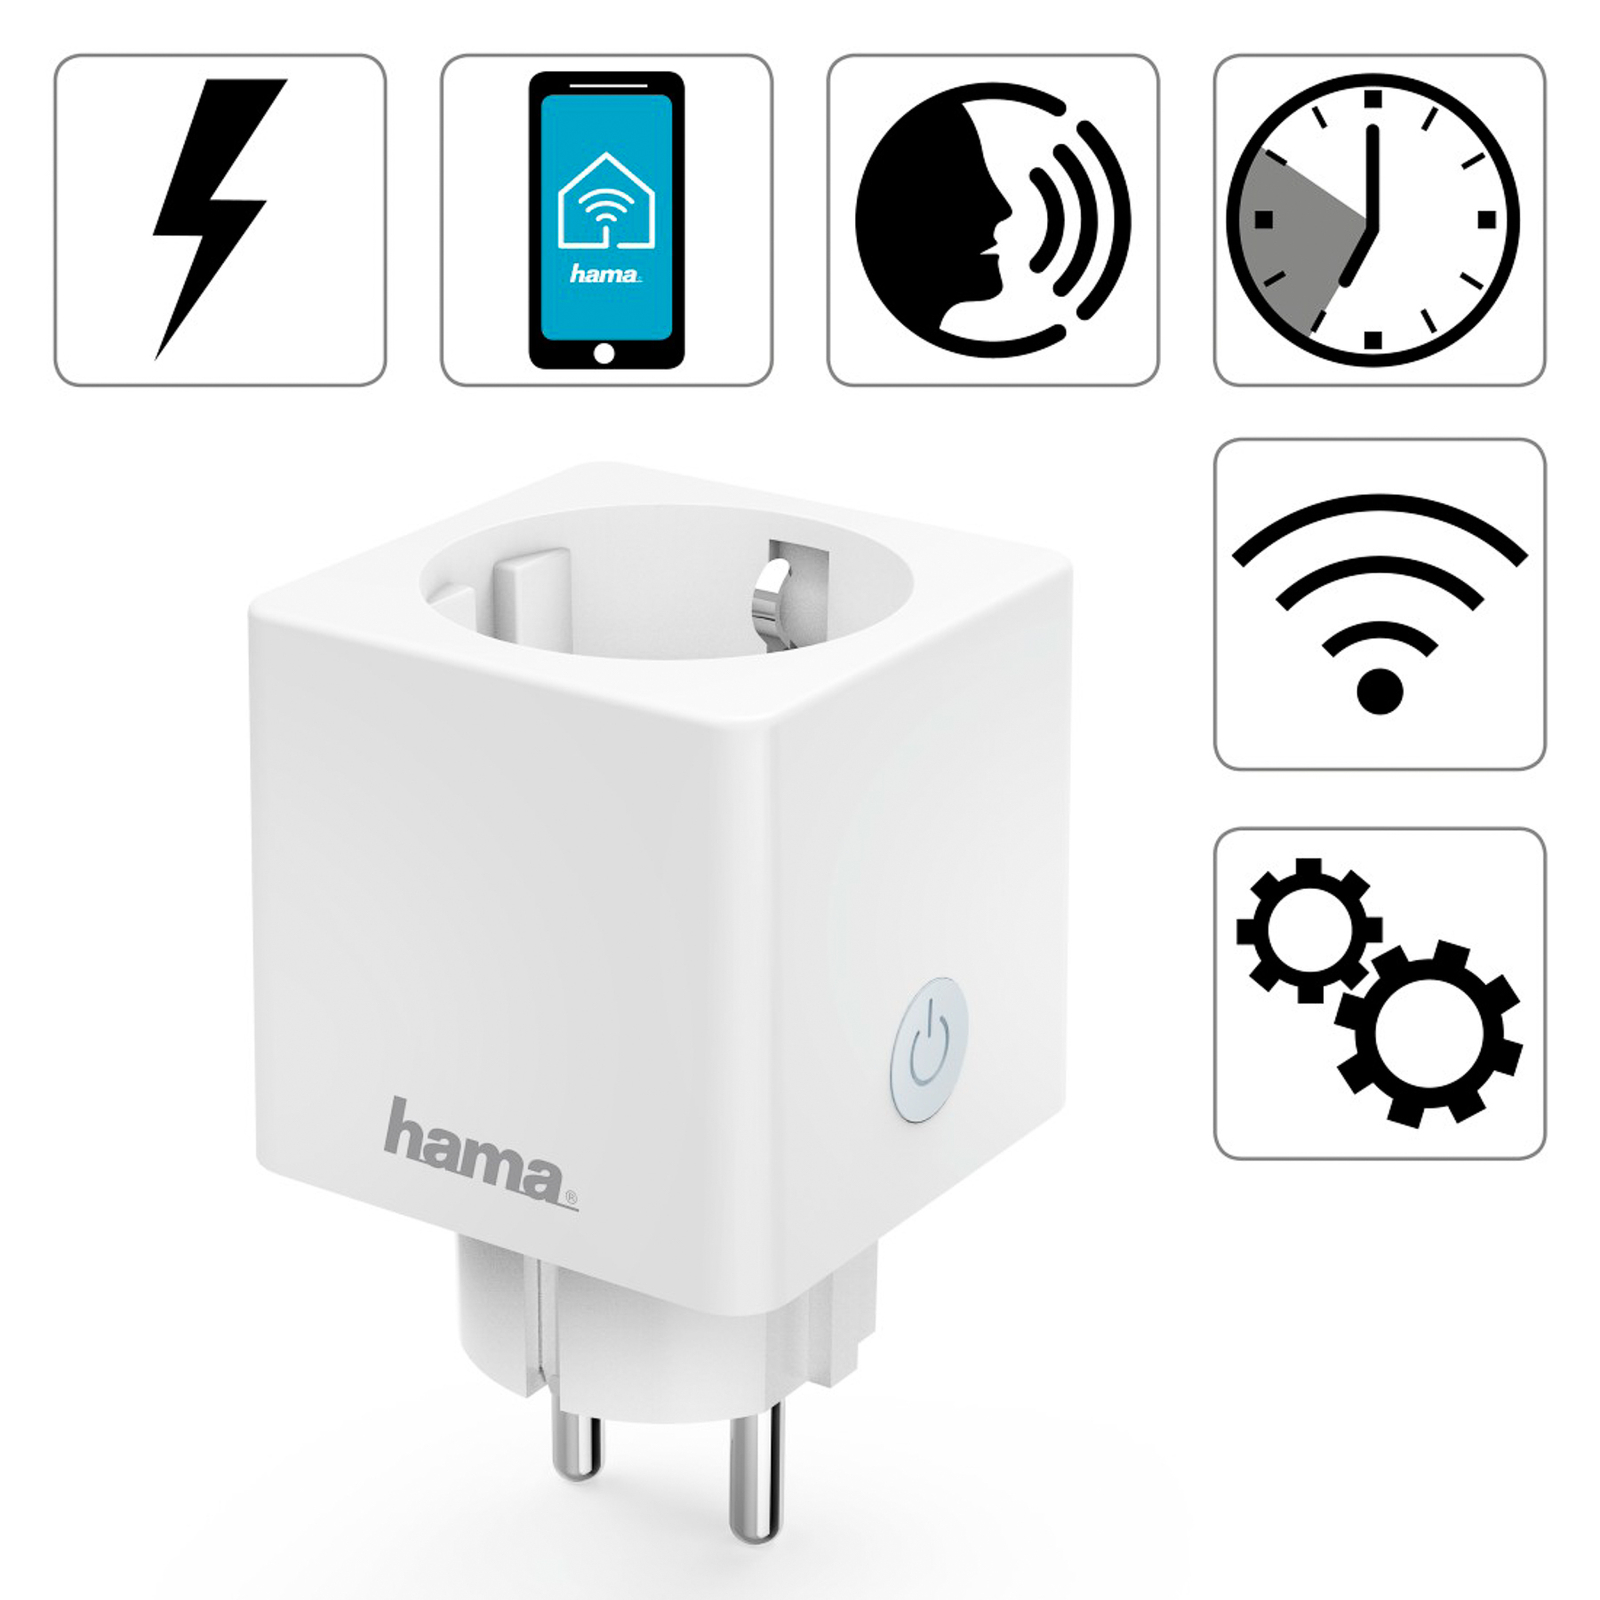 Hama Mini WLAN uttag strömmätare appkontroll